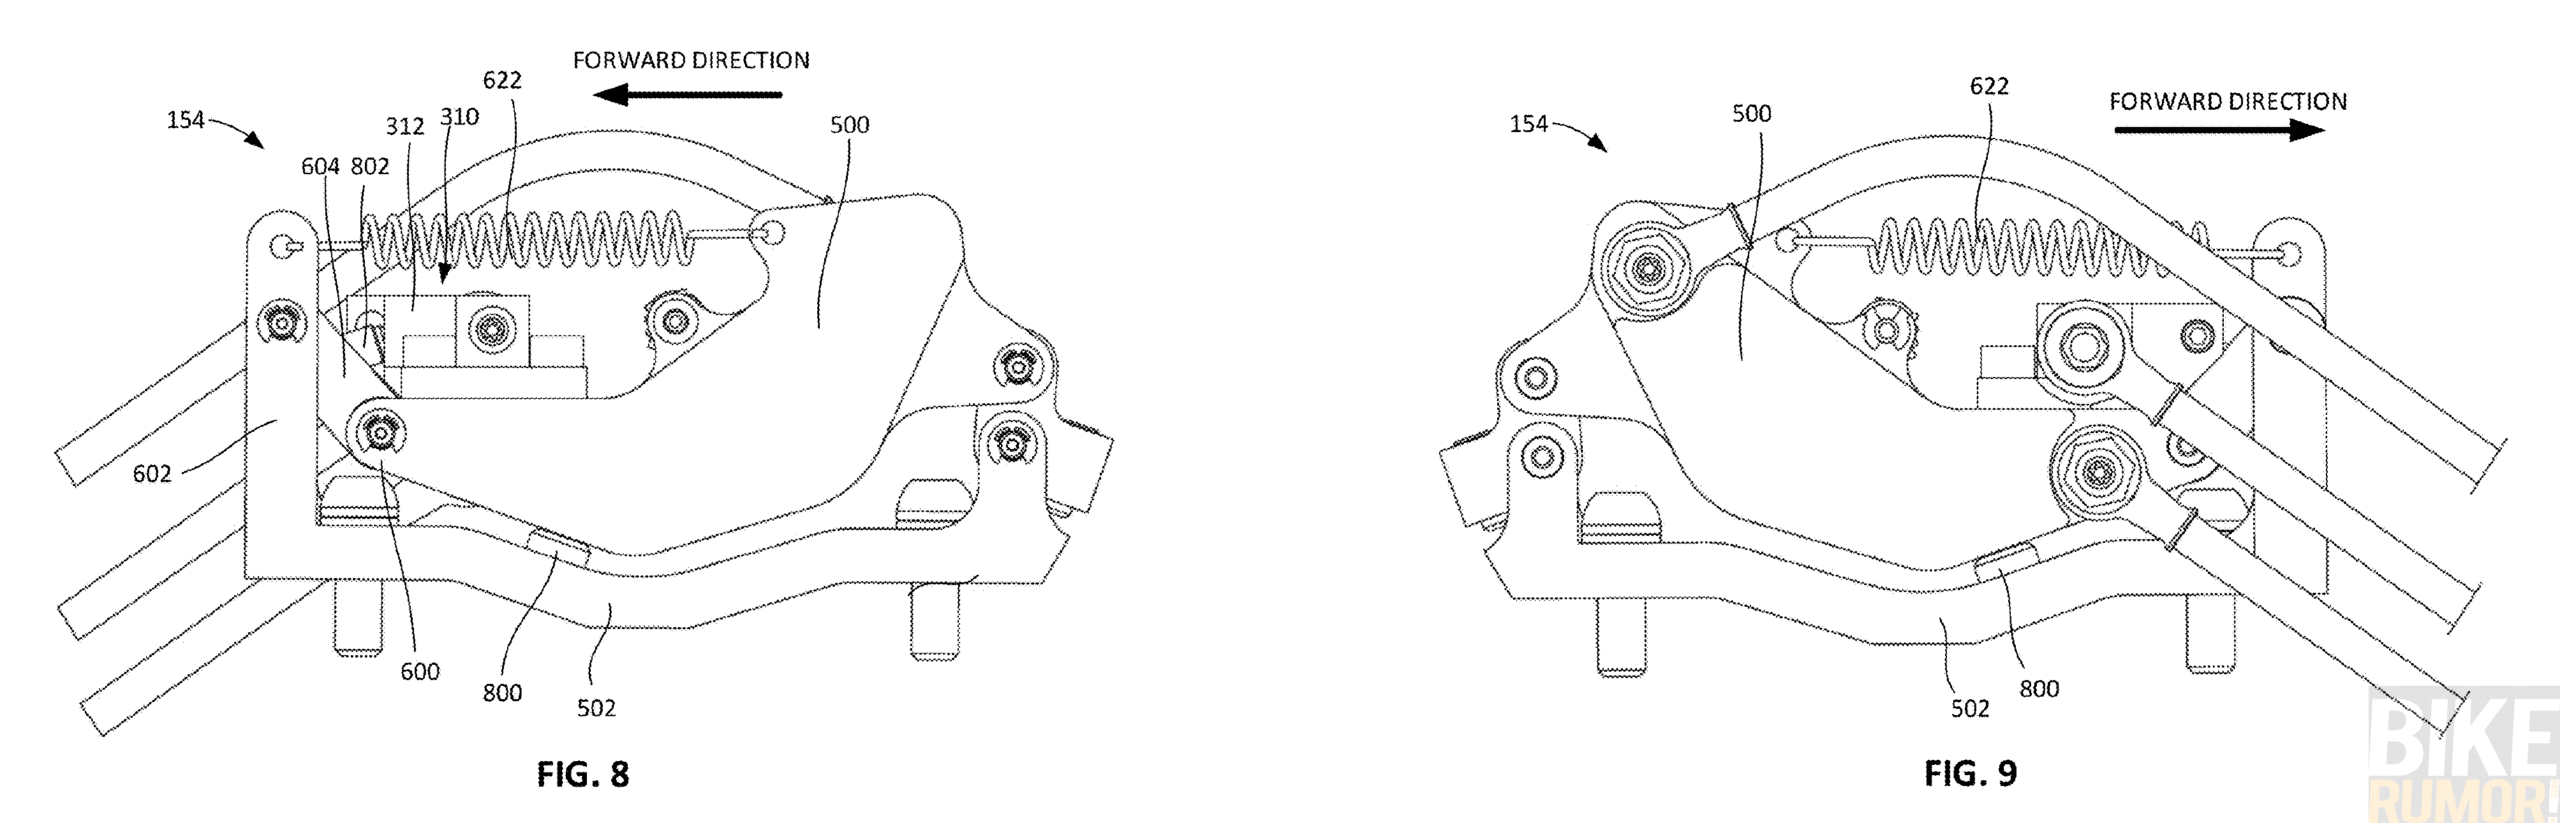 sram anti pitch hydraulic brake patent application drawing showing closeup of caliper design